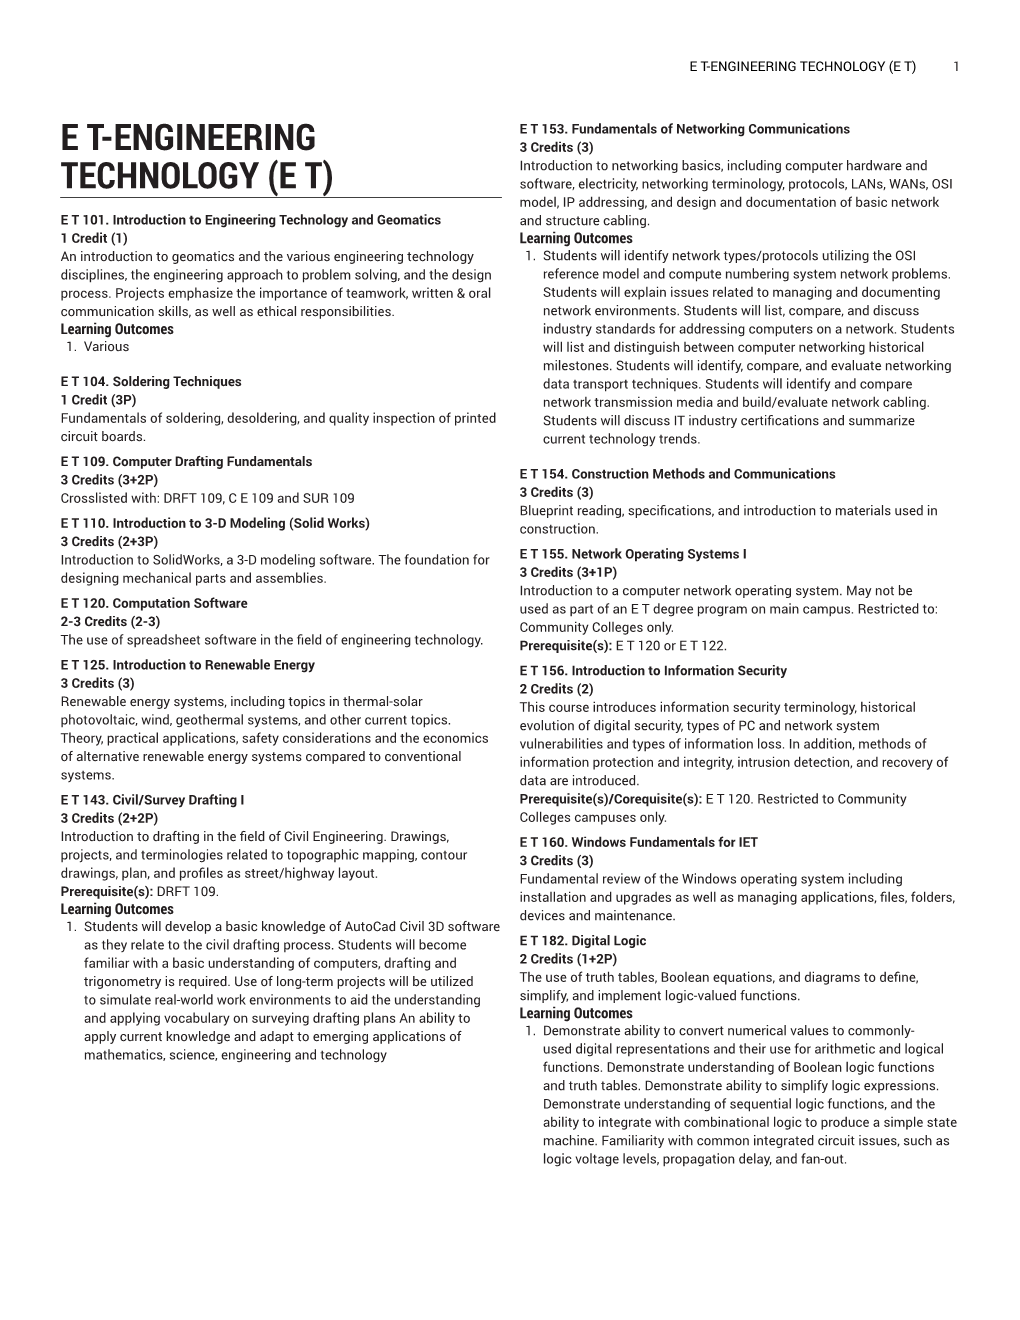 E T-Engineering Technology (E T) 1